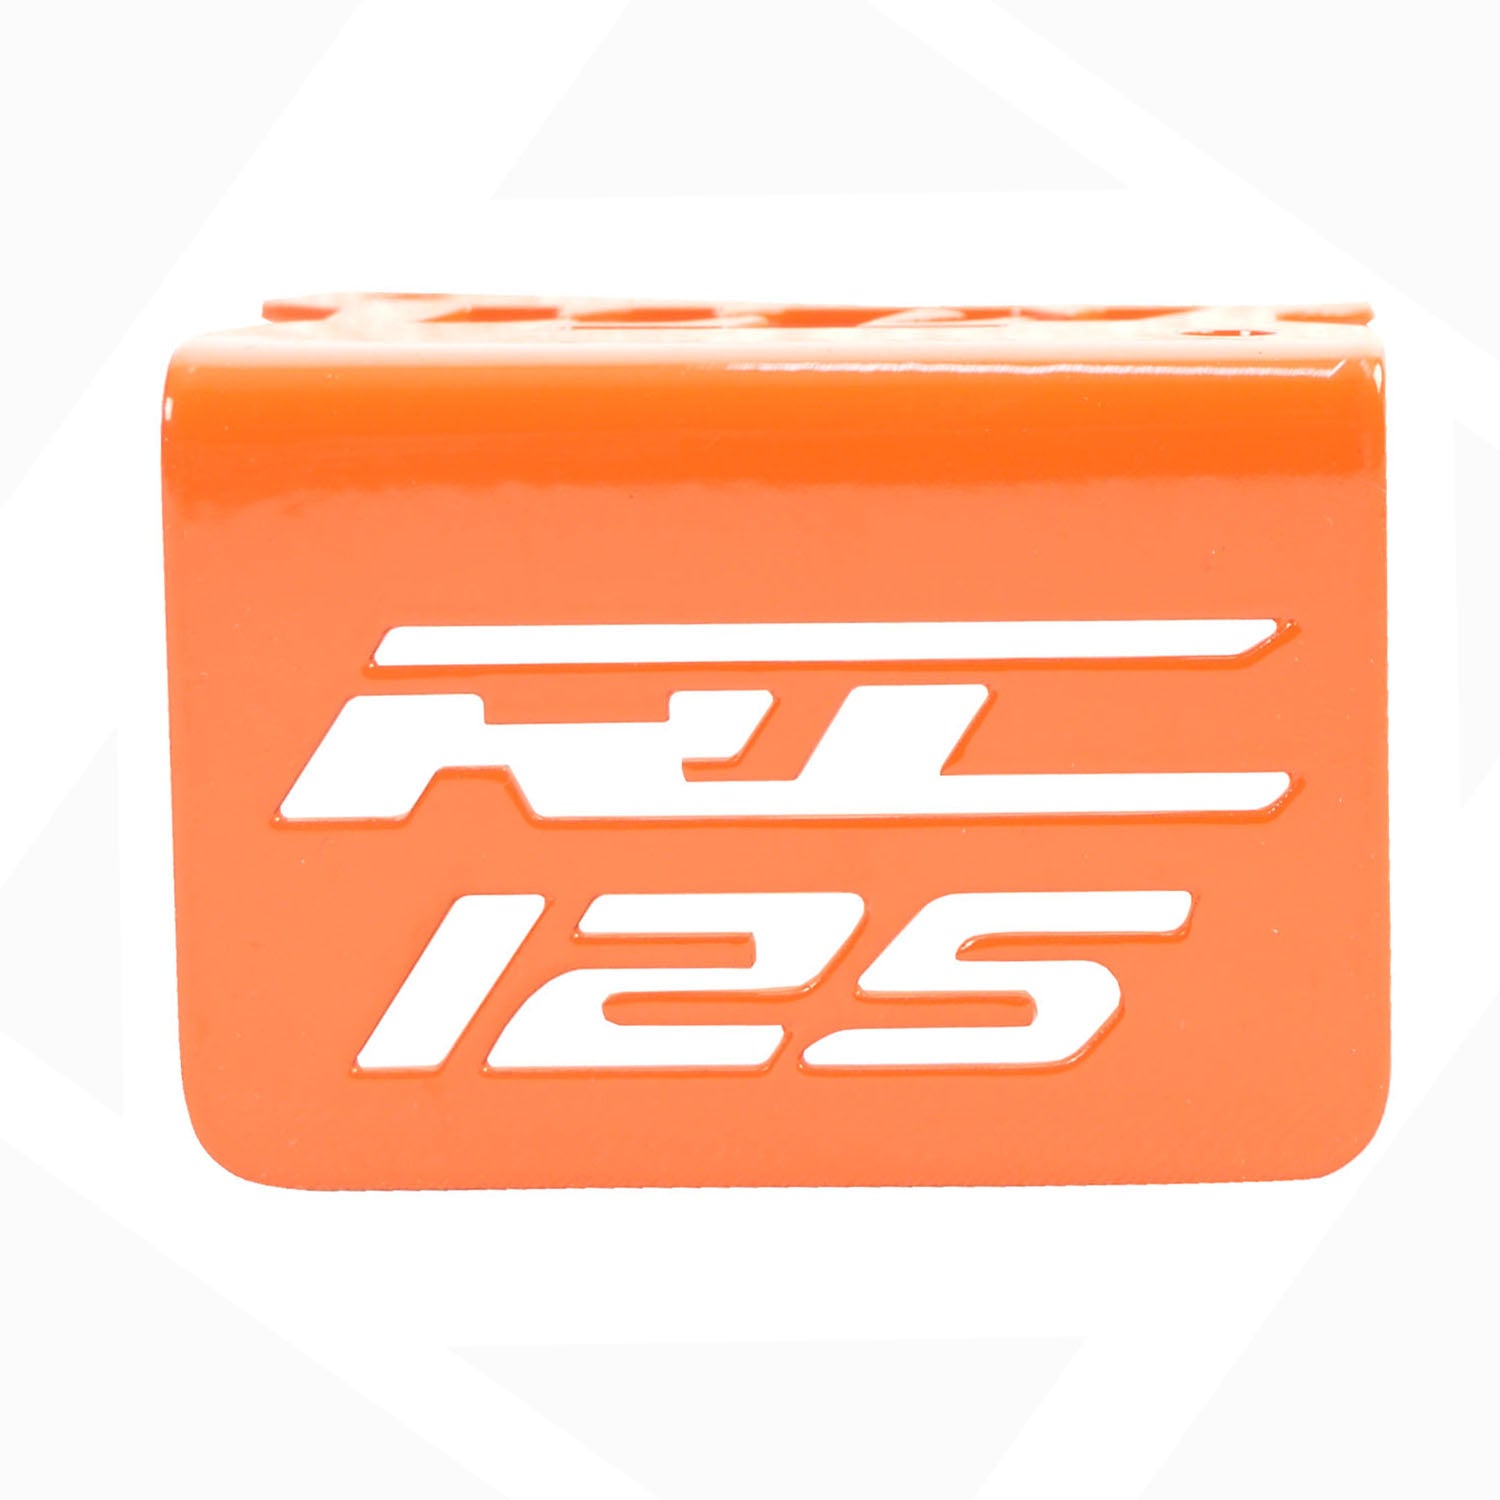 Rc minimalist logo Vectors & Illustrations for Free Download | Freepik